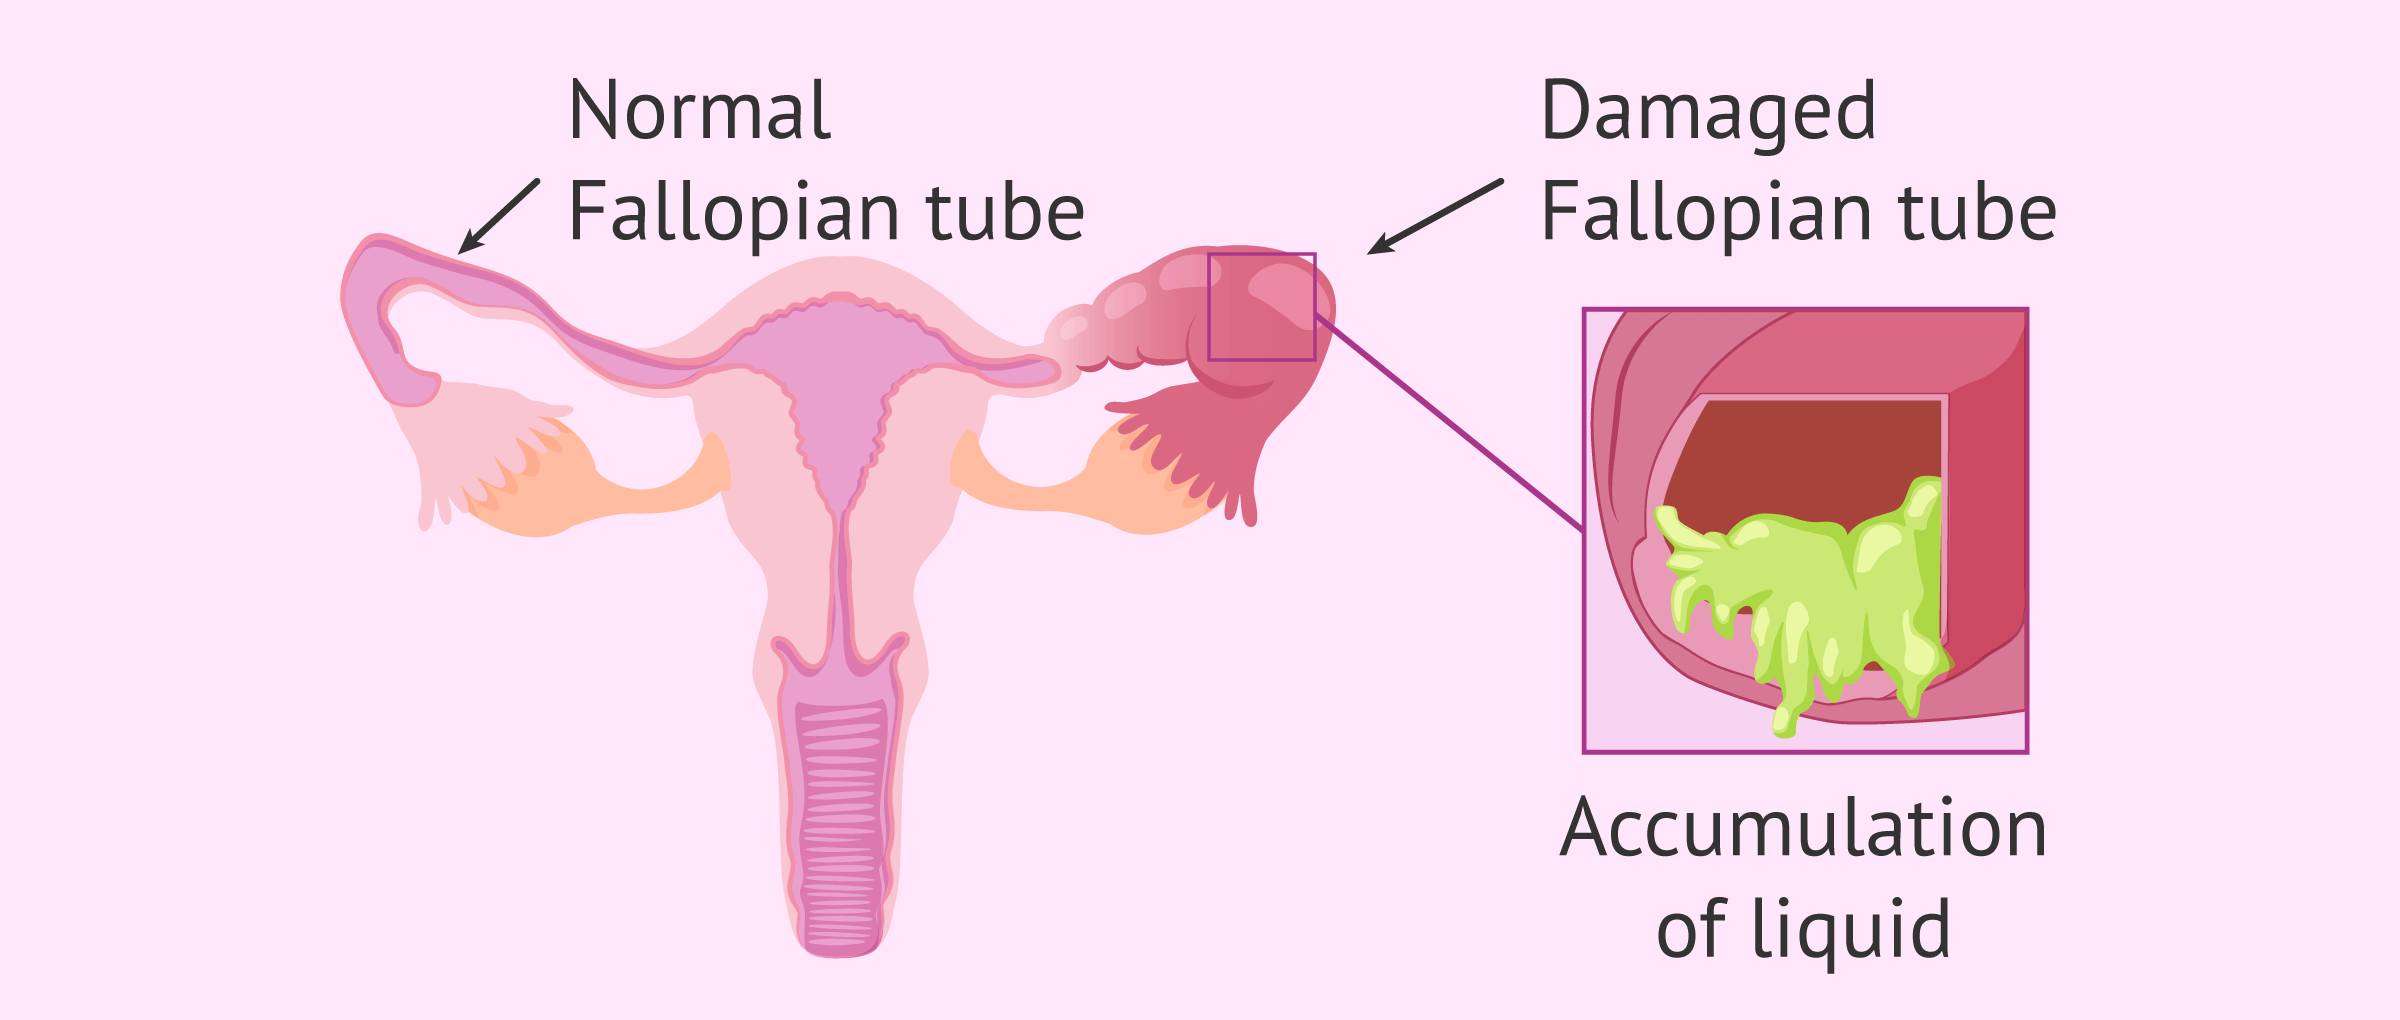 Normal Fallopian tube and Fallopian tube with hydrosalpinx